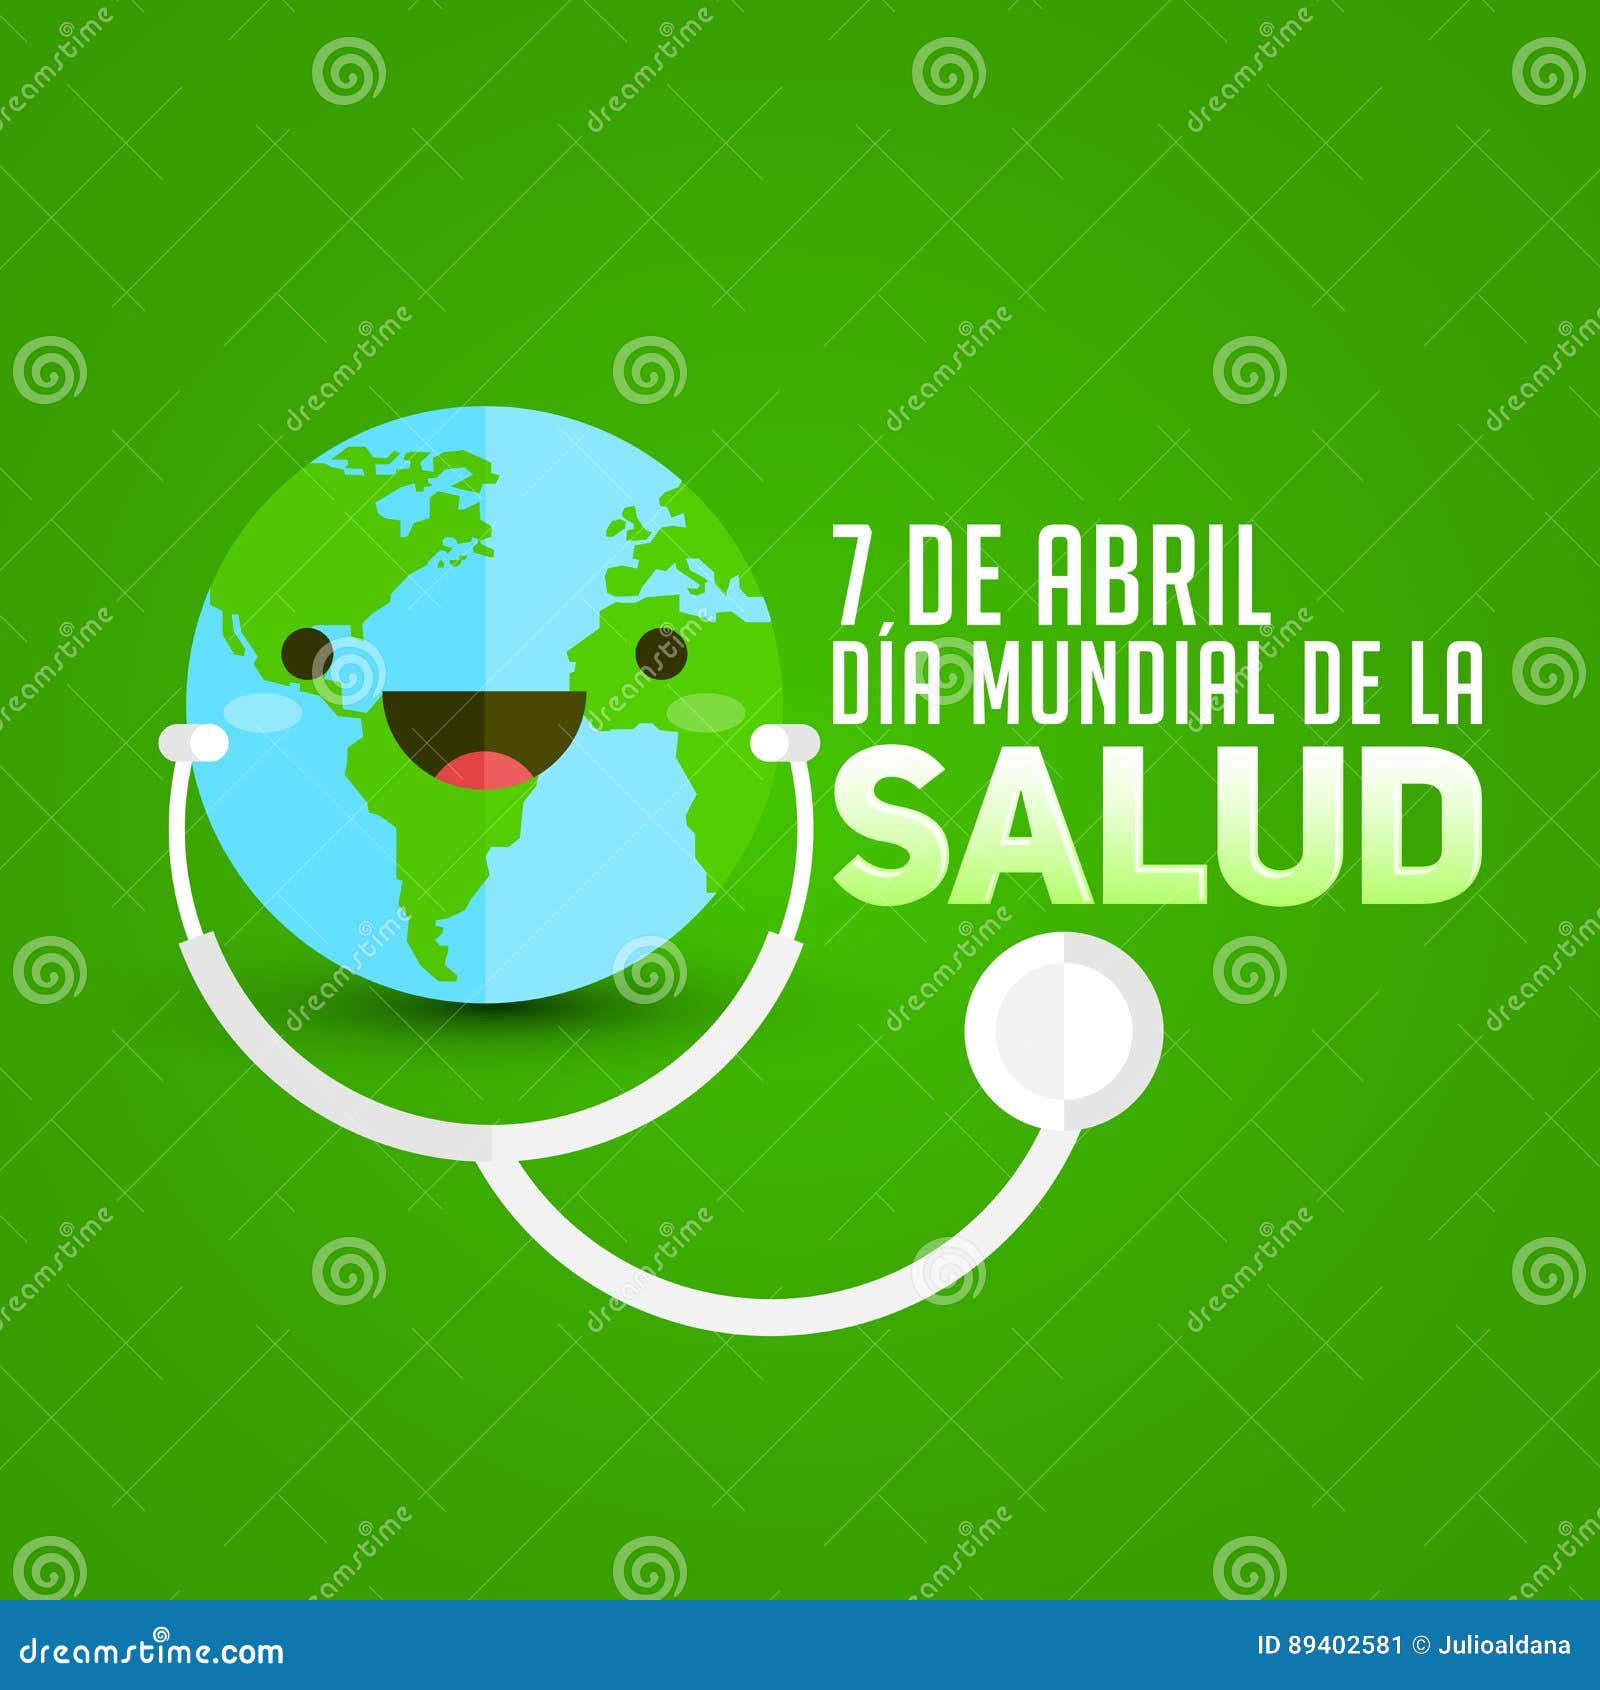 dia mundial de la salud - world health day april 7 spanish text